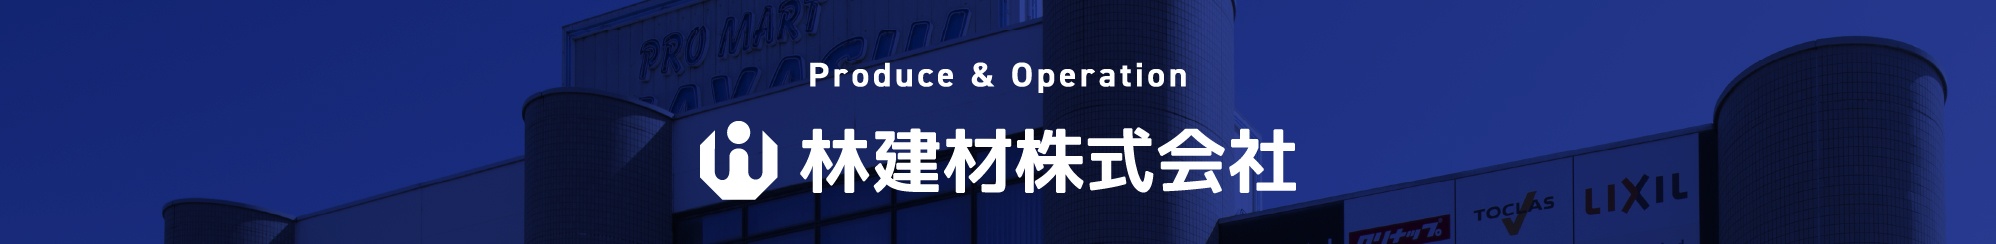 Produce & Operation　林建材株式会社